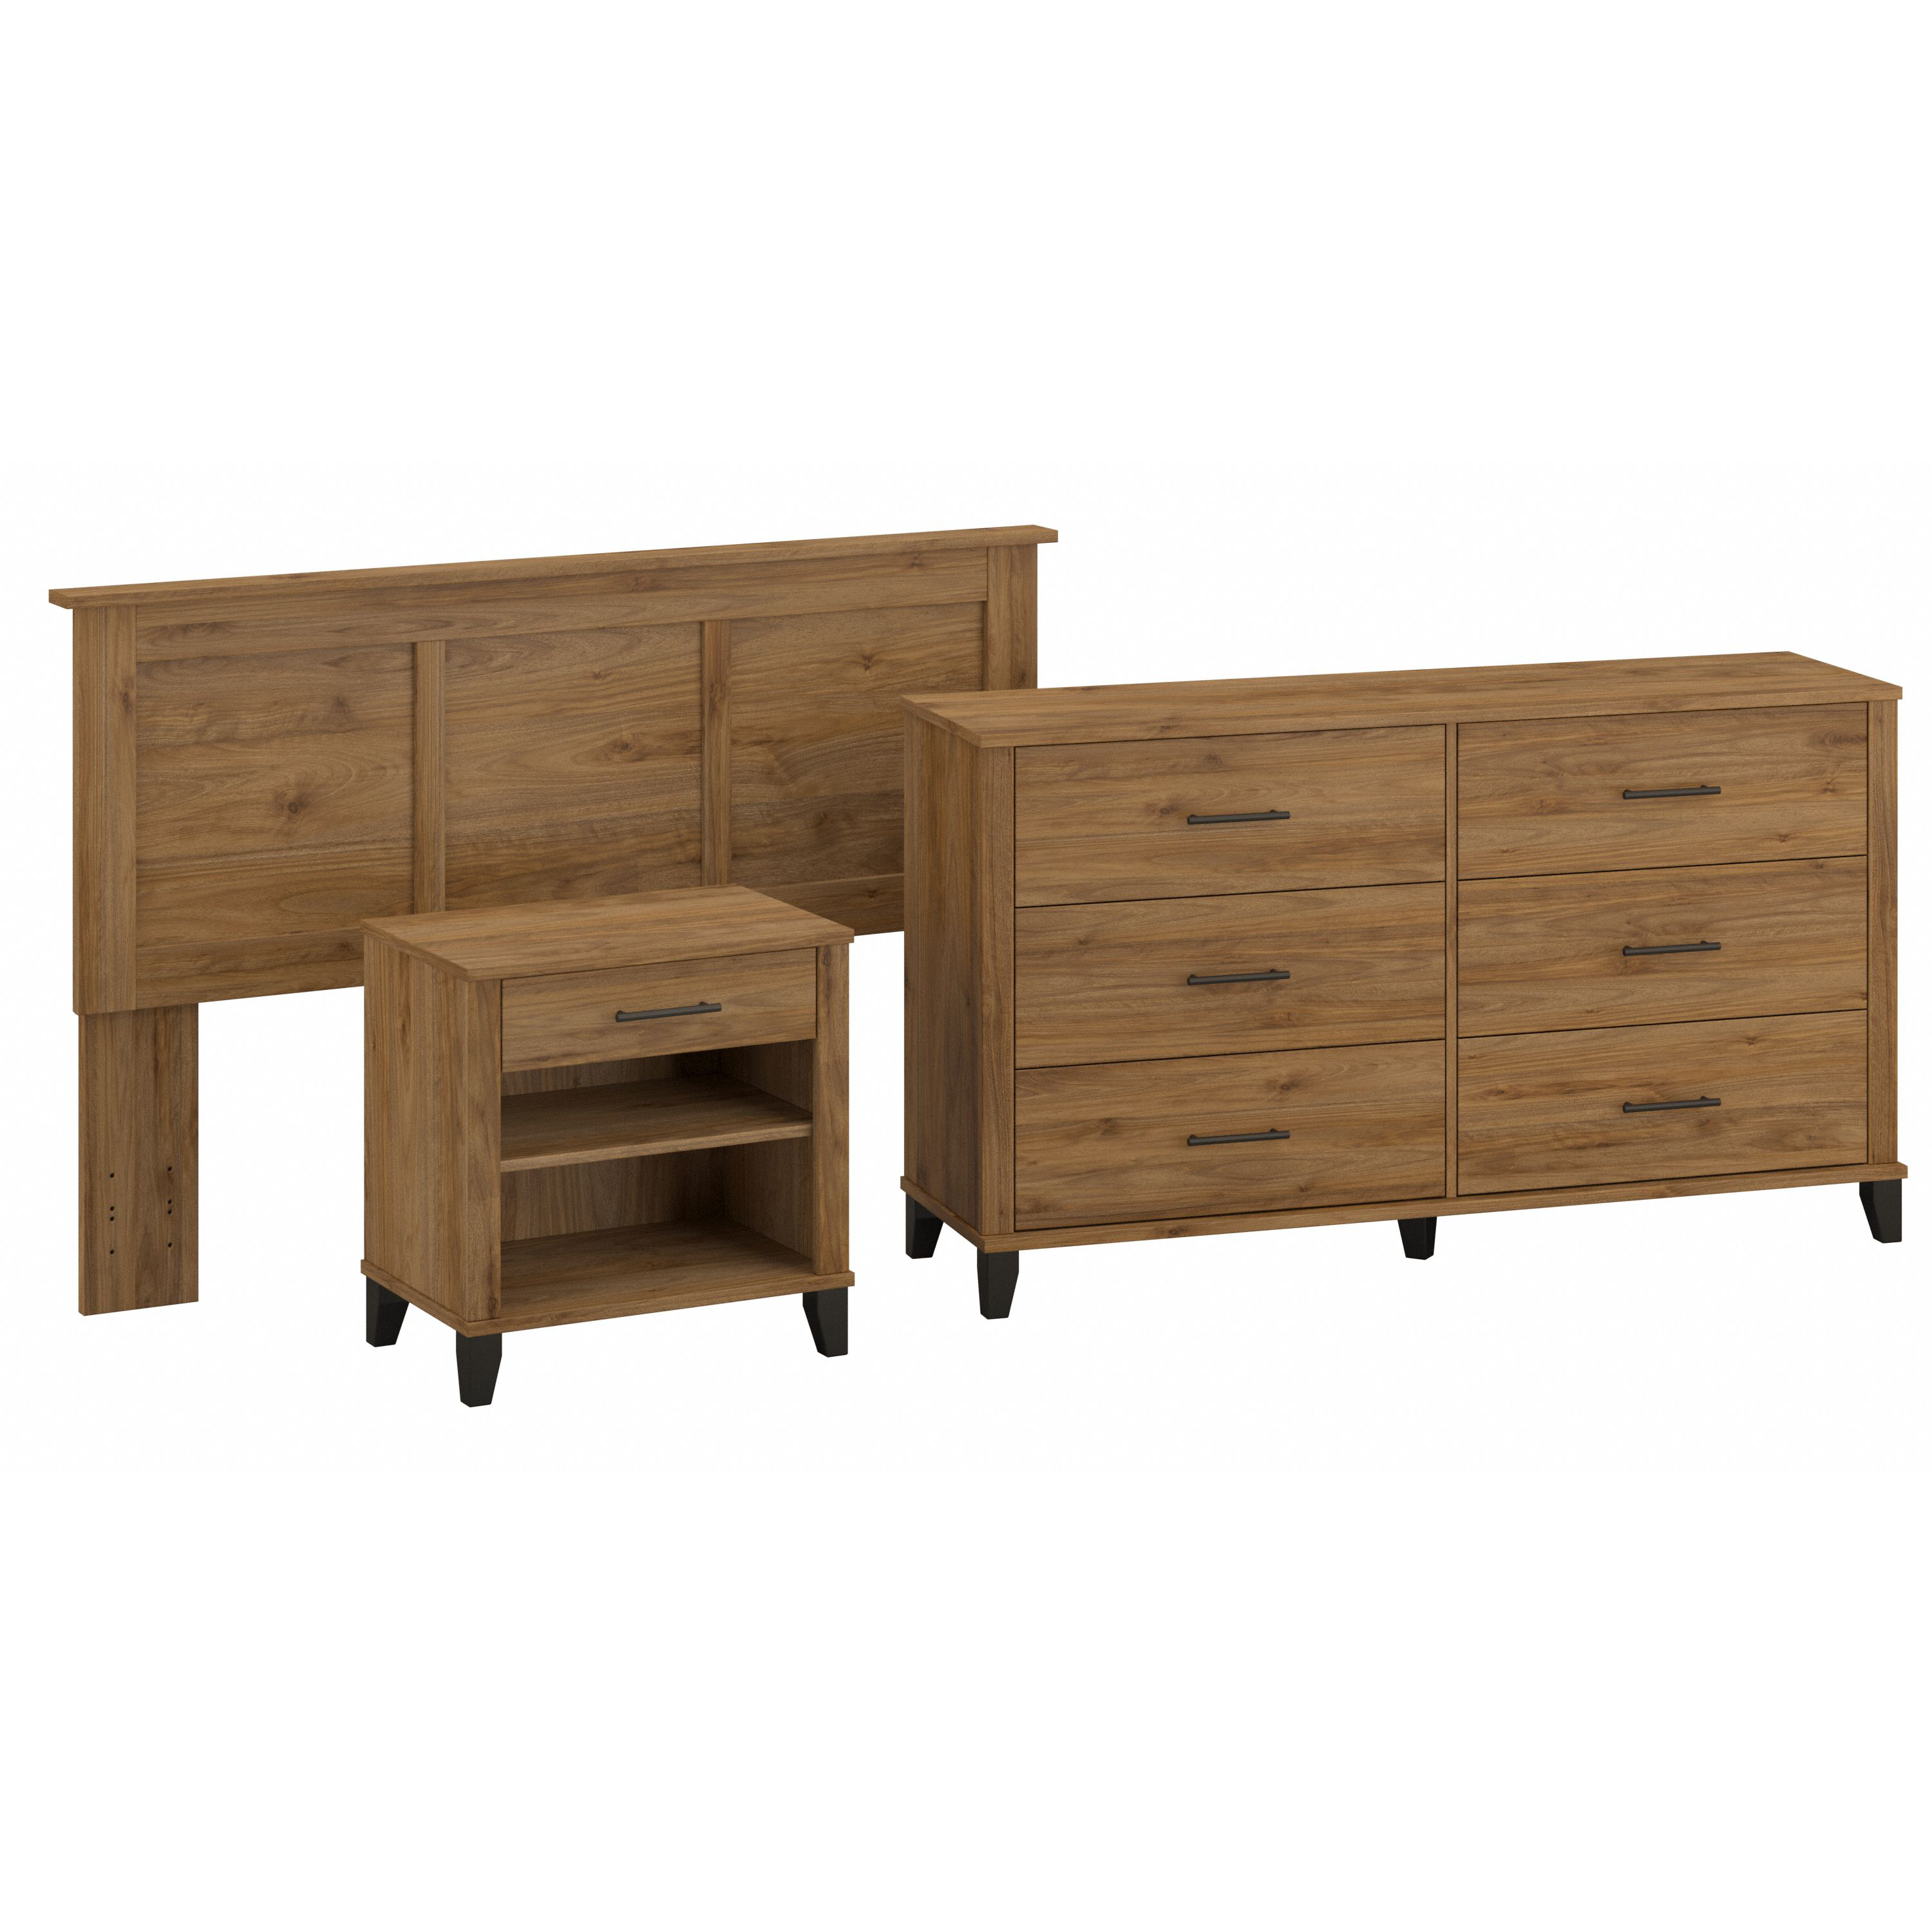 Shop Bush Furniture Somerset Full/Queen Size Headboard, Dresser and Nightstand Bedroom Set 02 SET003FW #color_fresh walnut